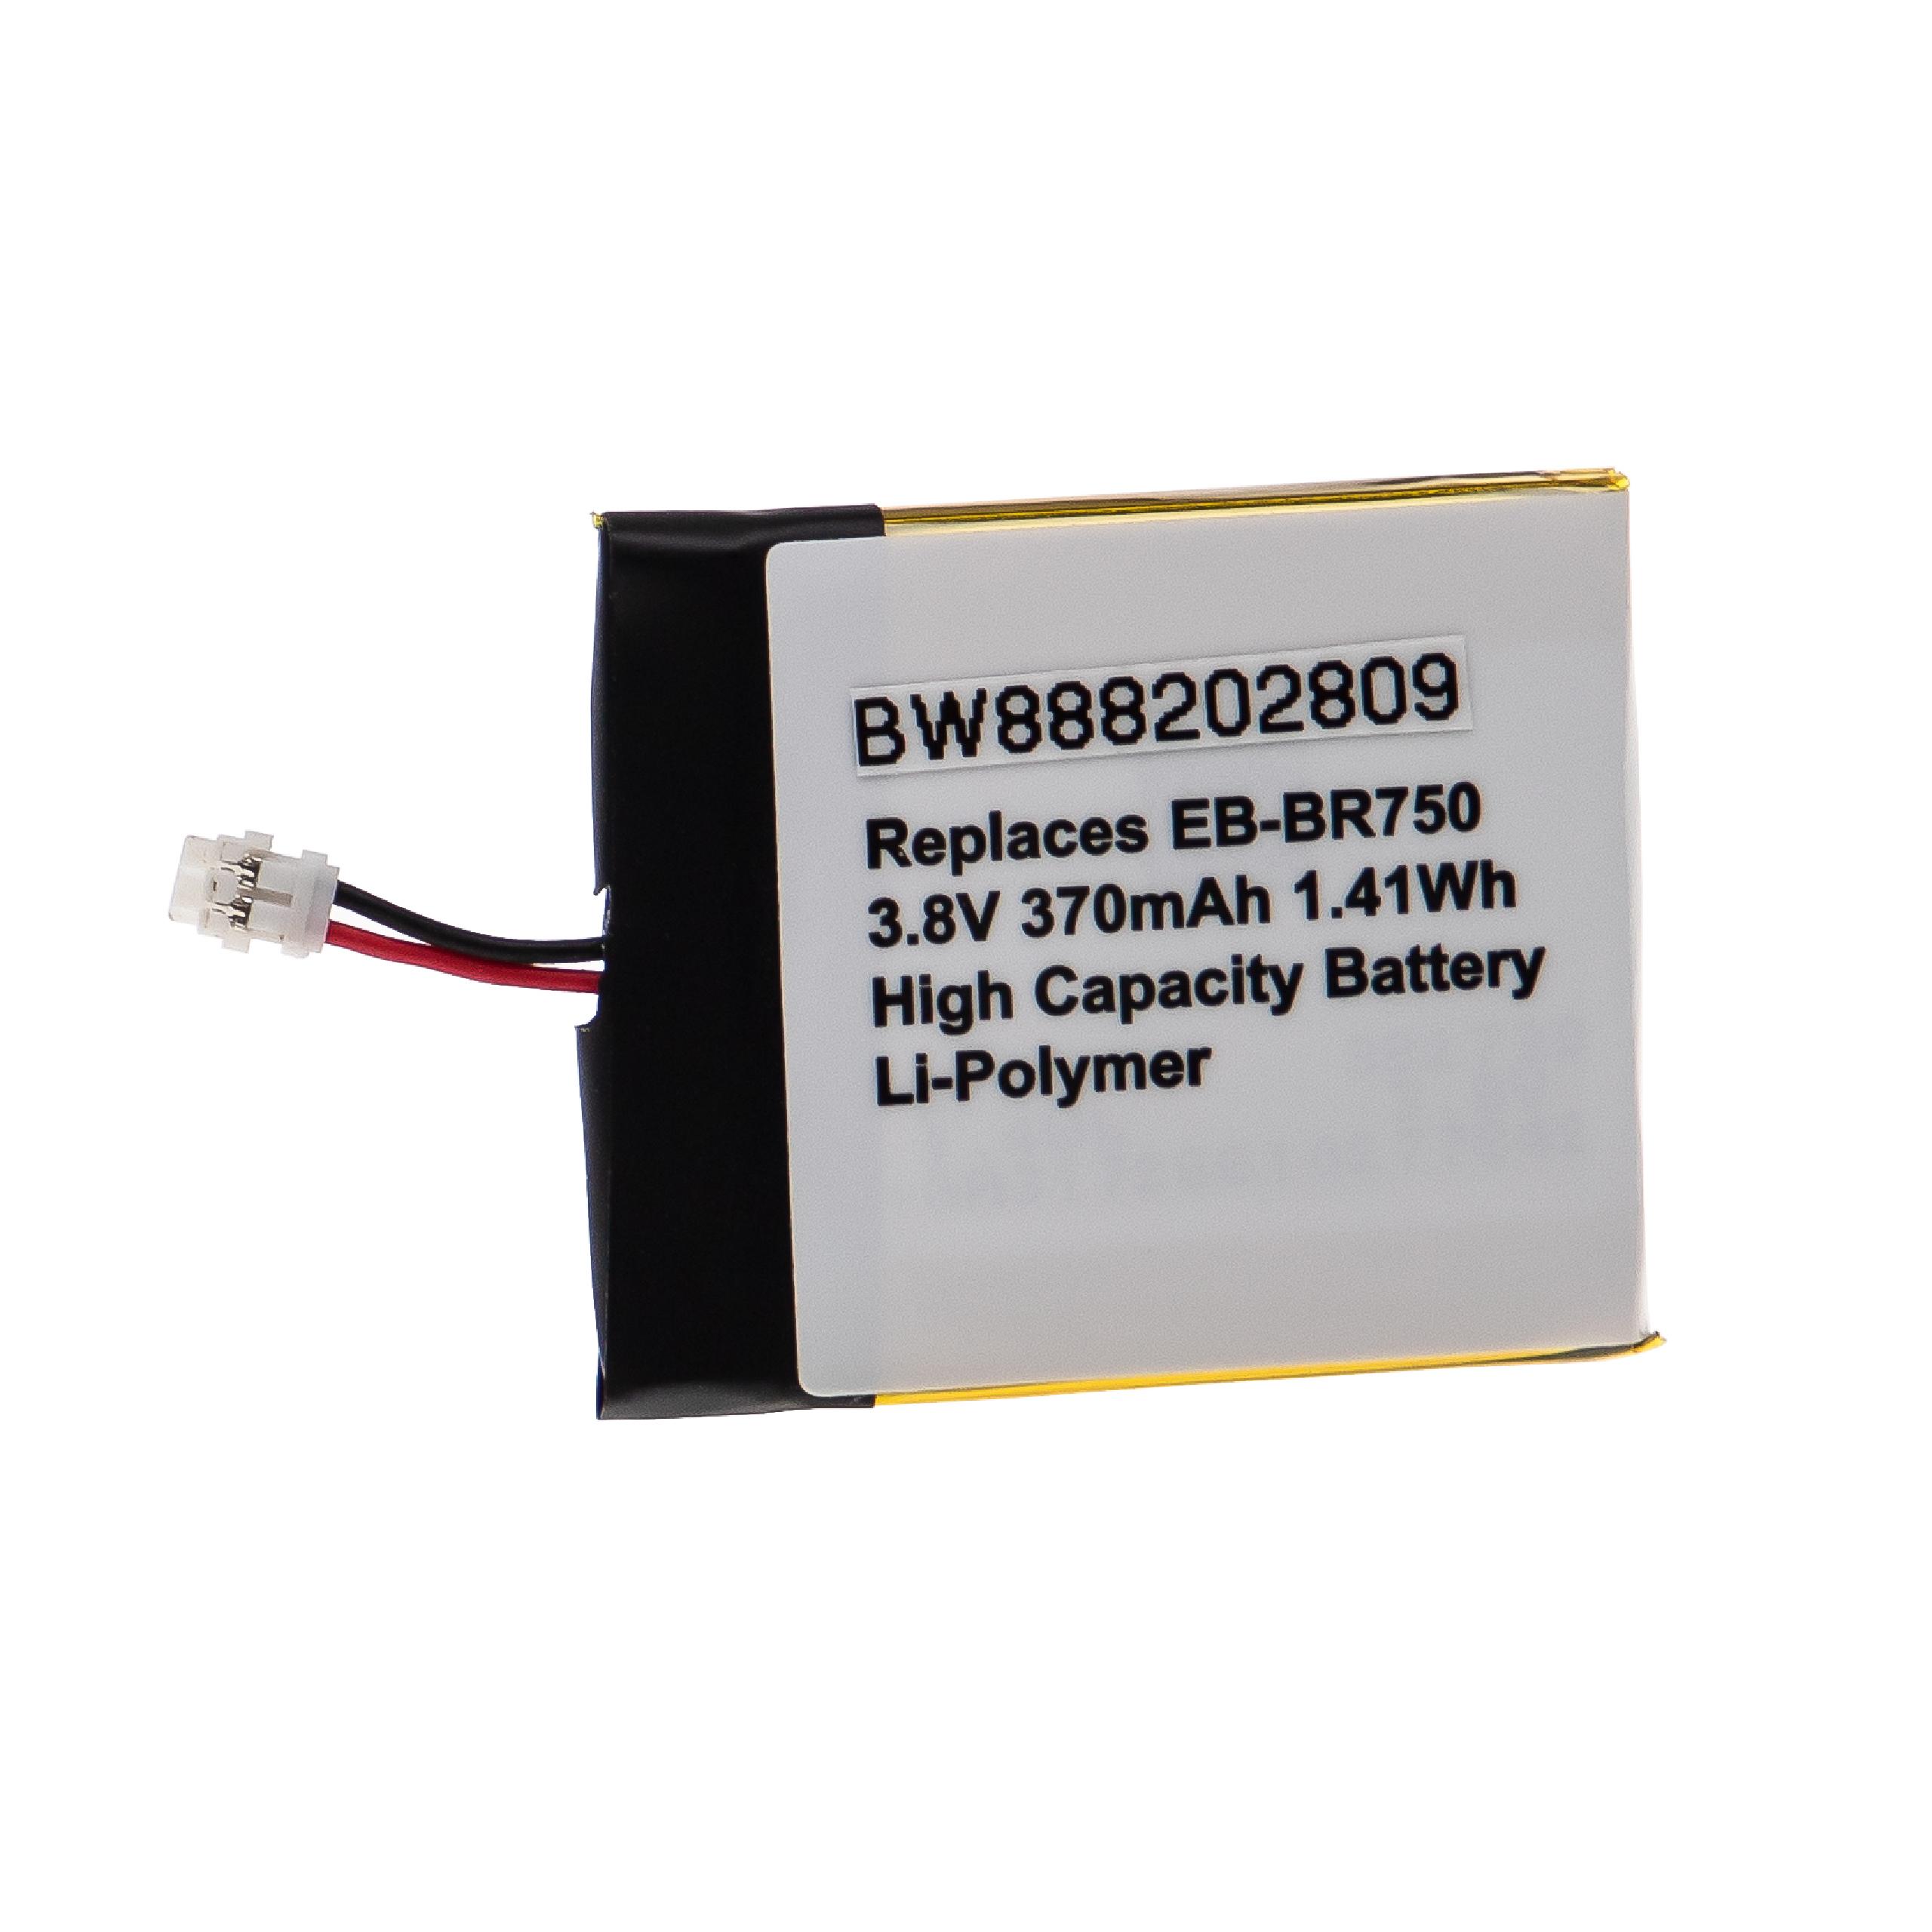 Smartwatch Battery Replacement for Samsung EB-BR750ABE, EB-BR750 - 370mAh 3.8V Li-polymer